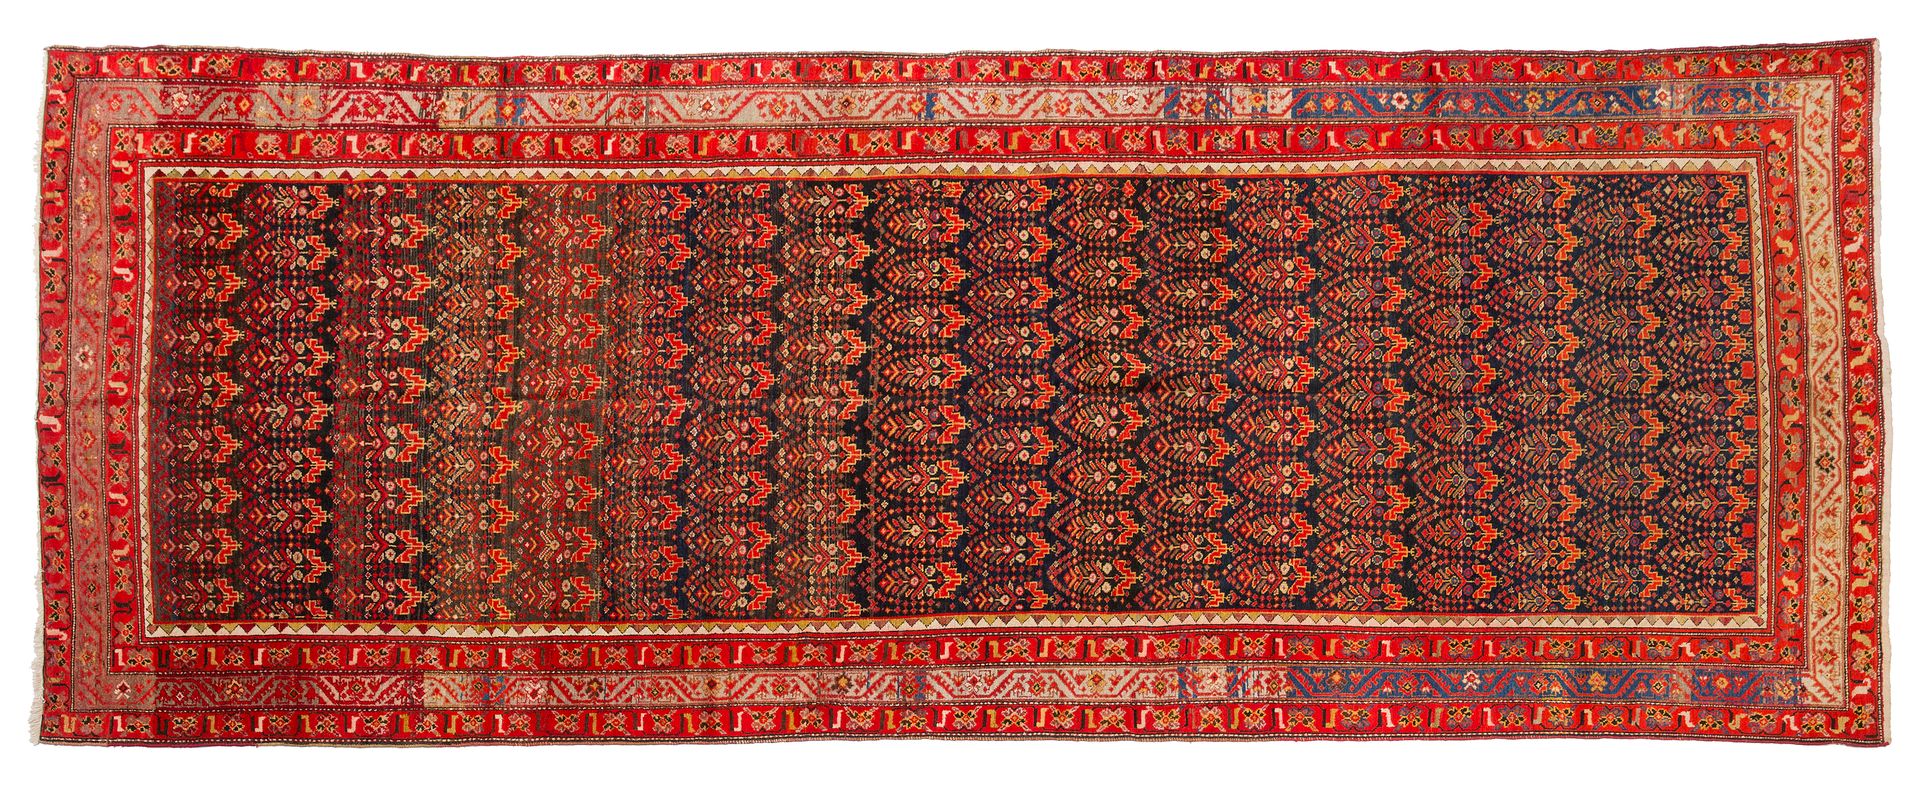 Null MELAYER carpet (Persia), late 19th century

Dimensions : 482 x 203cm.

Tech&hellip;